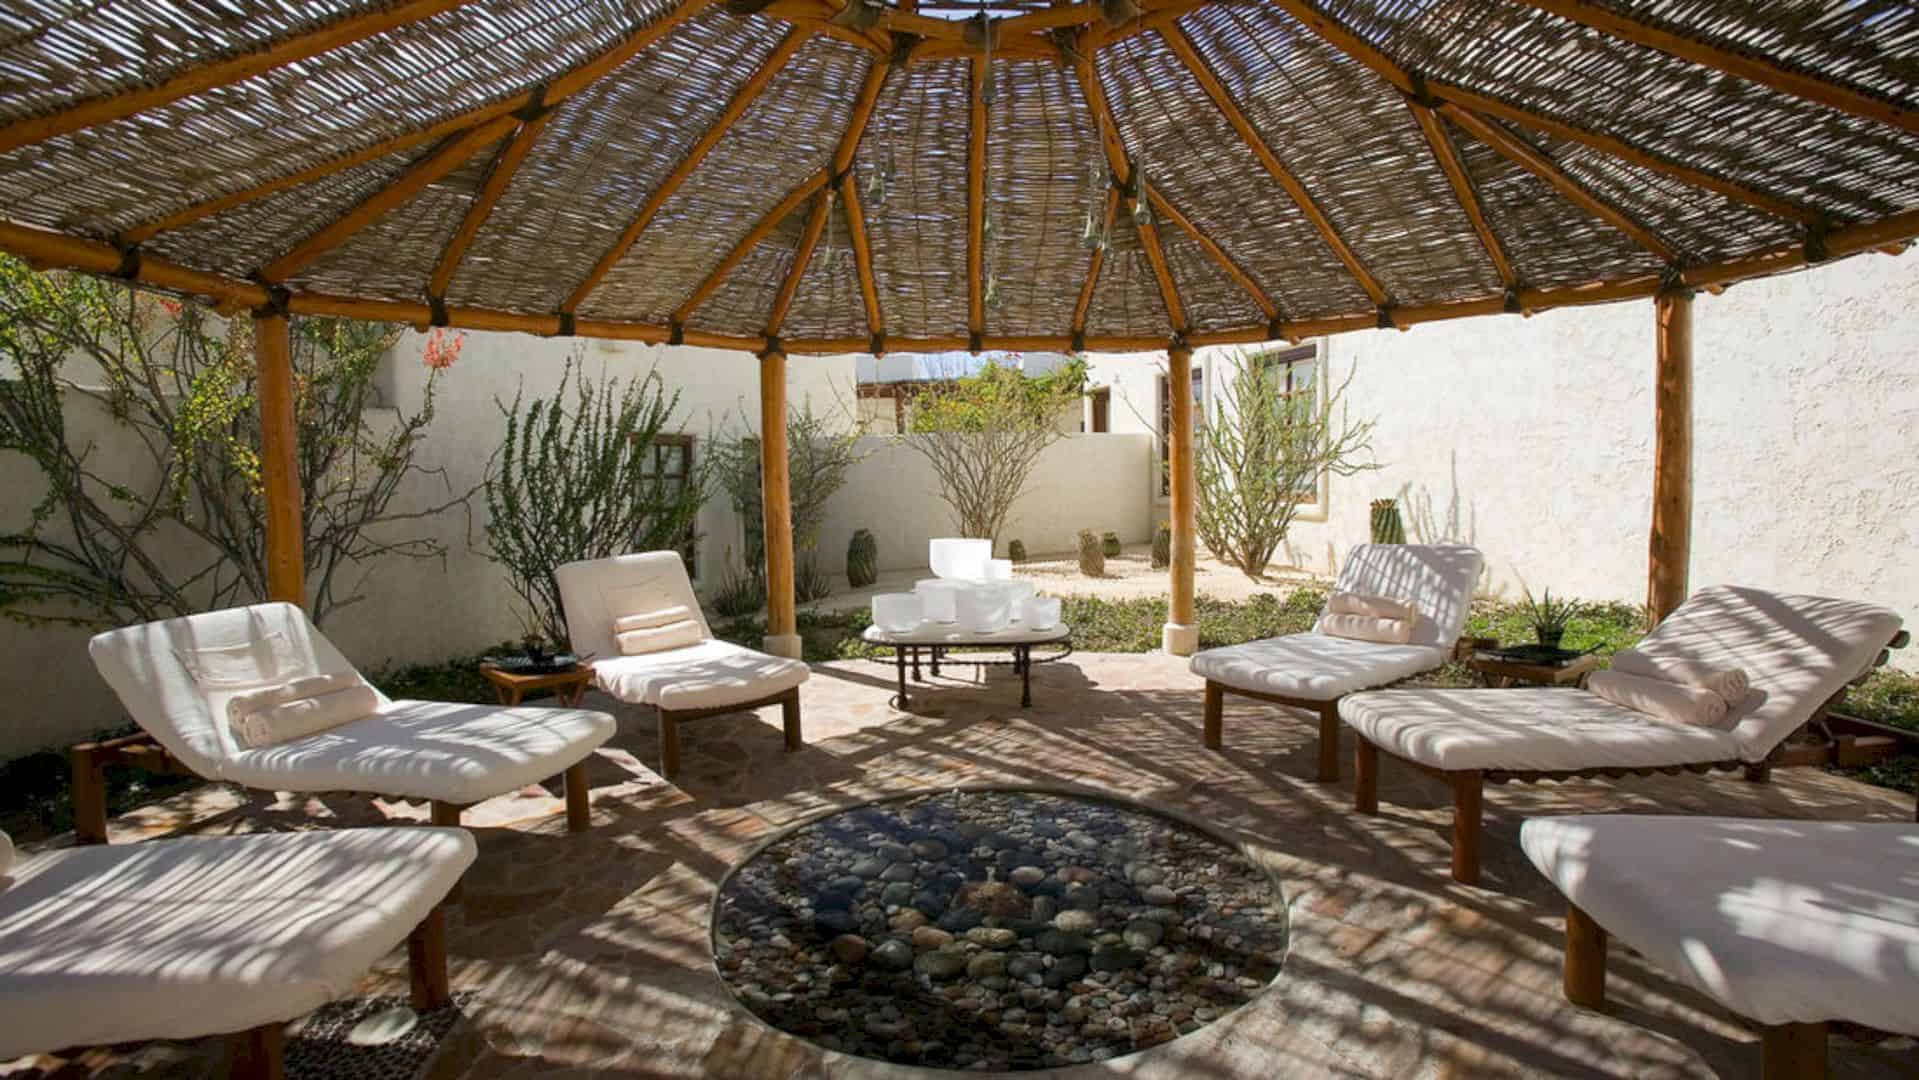 Las Ventanas Al Paraiso Award Winning Mexican Resort On A Seemingly Lifeless Landscape 8